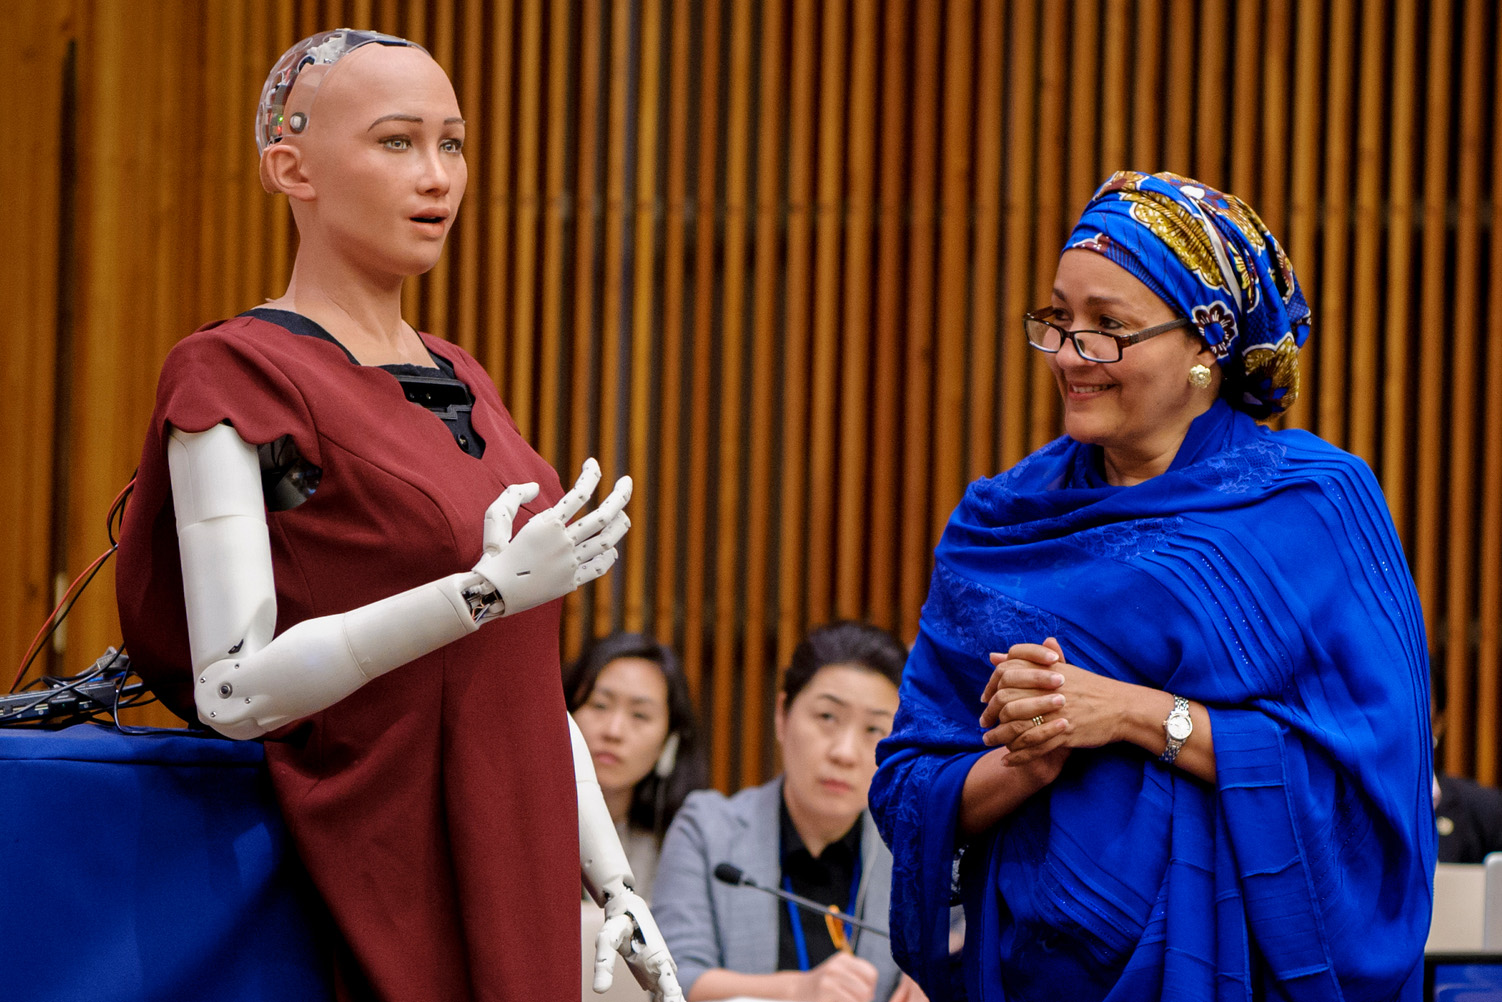 humanoid robot and DSG Amina Mohamed